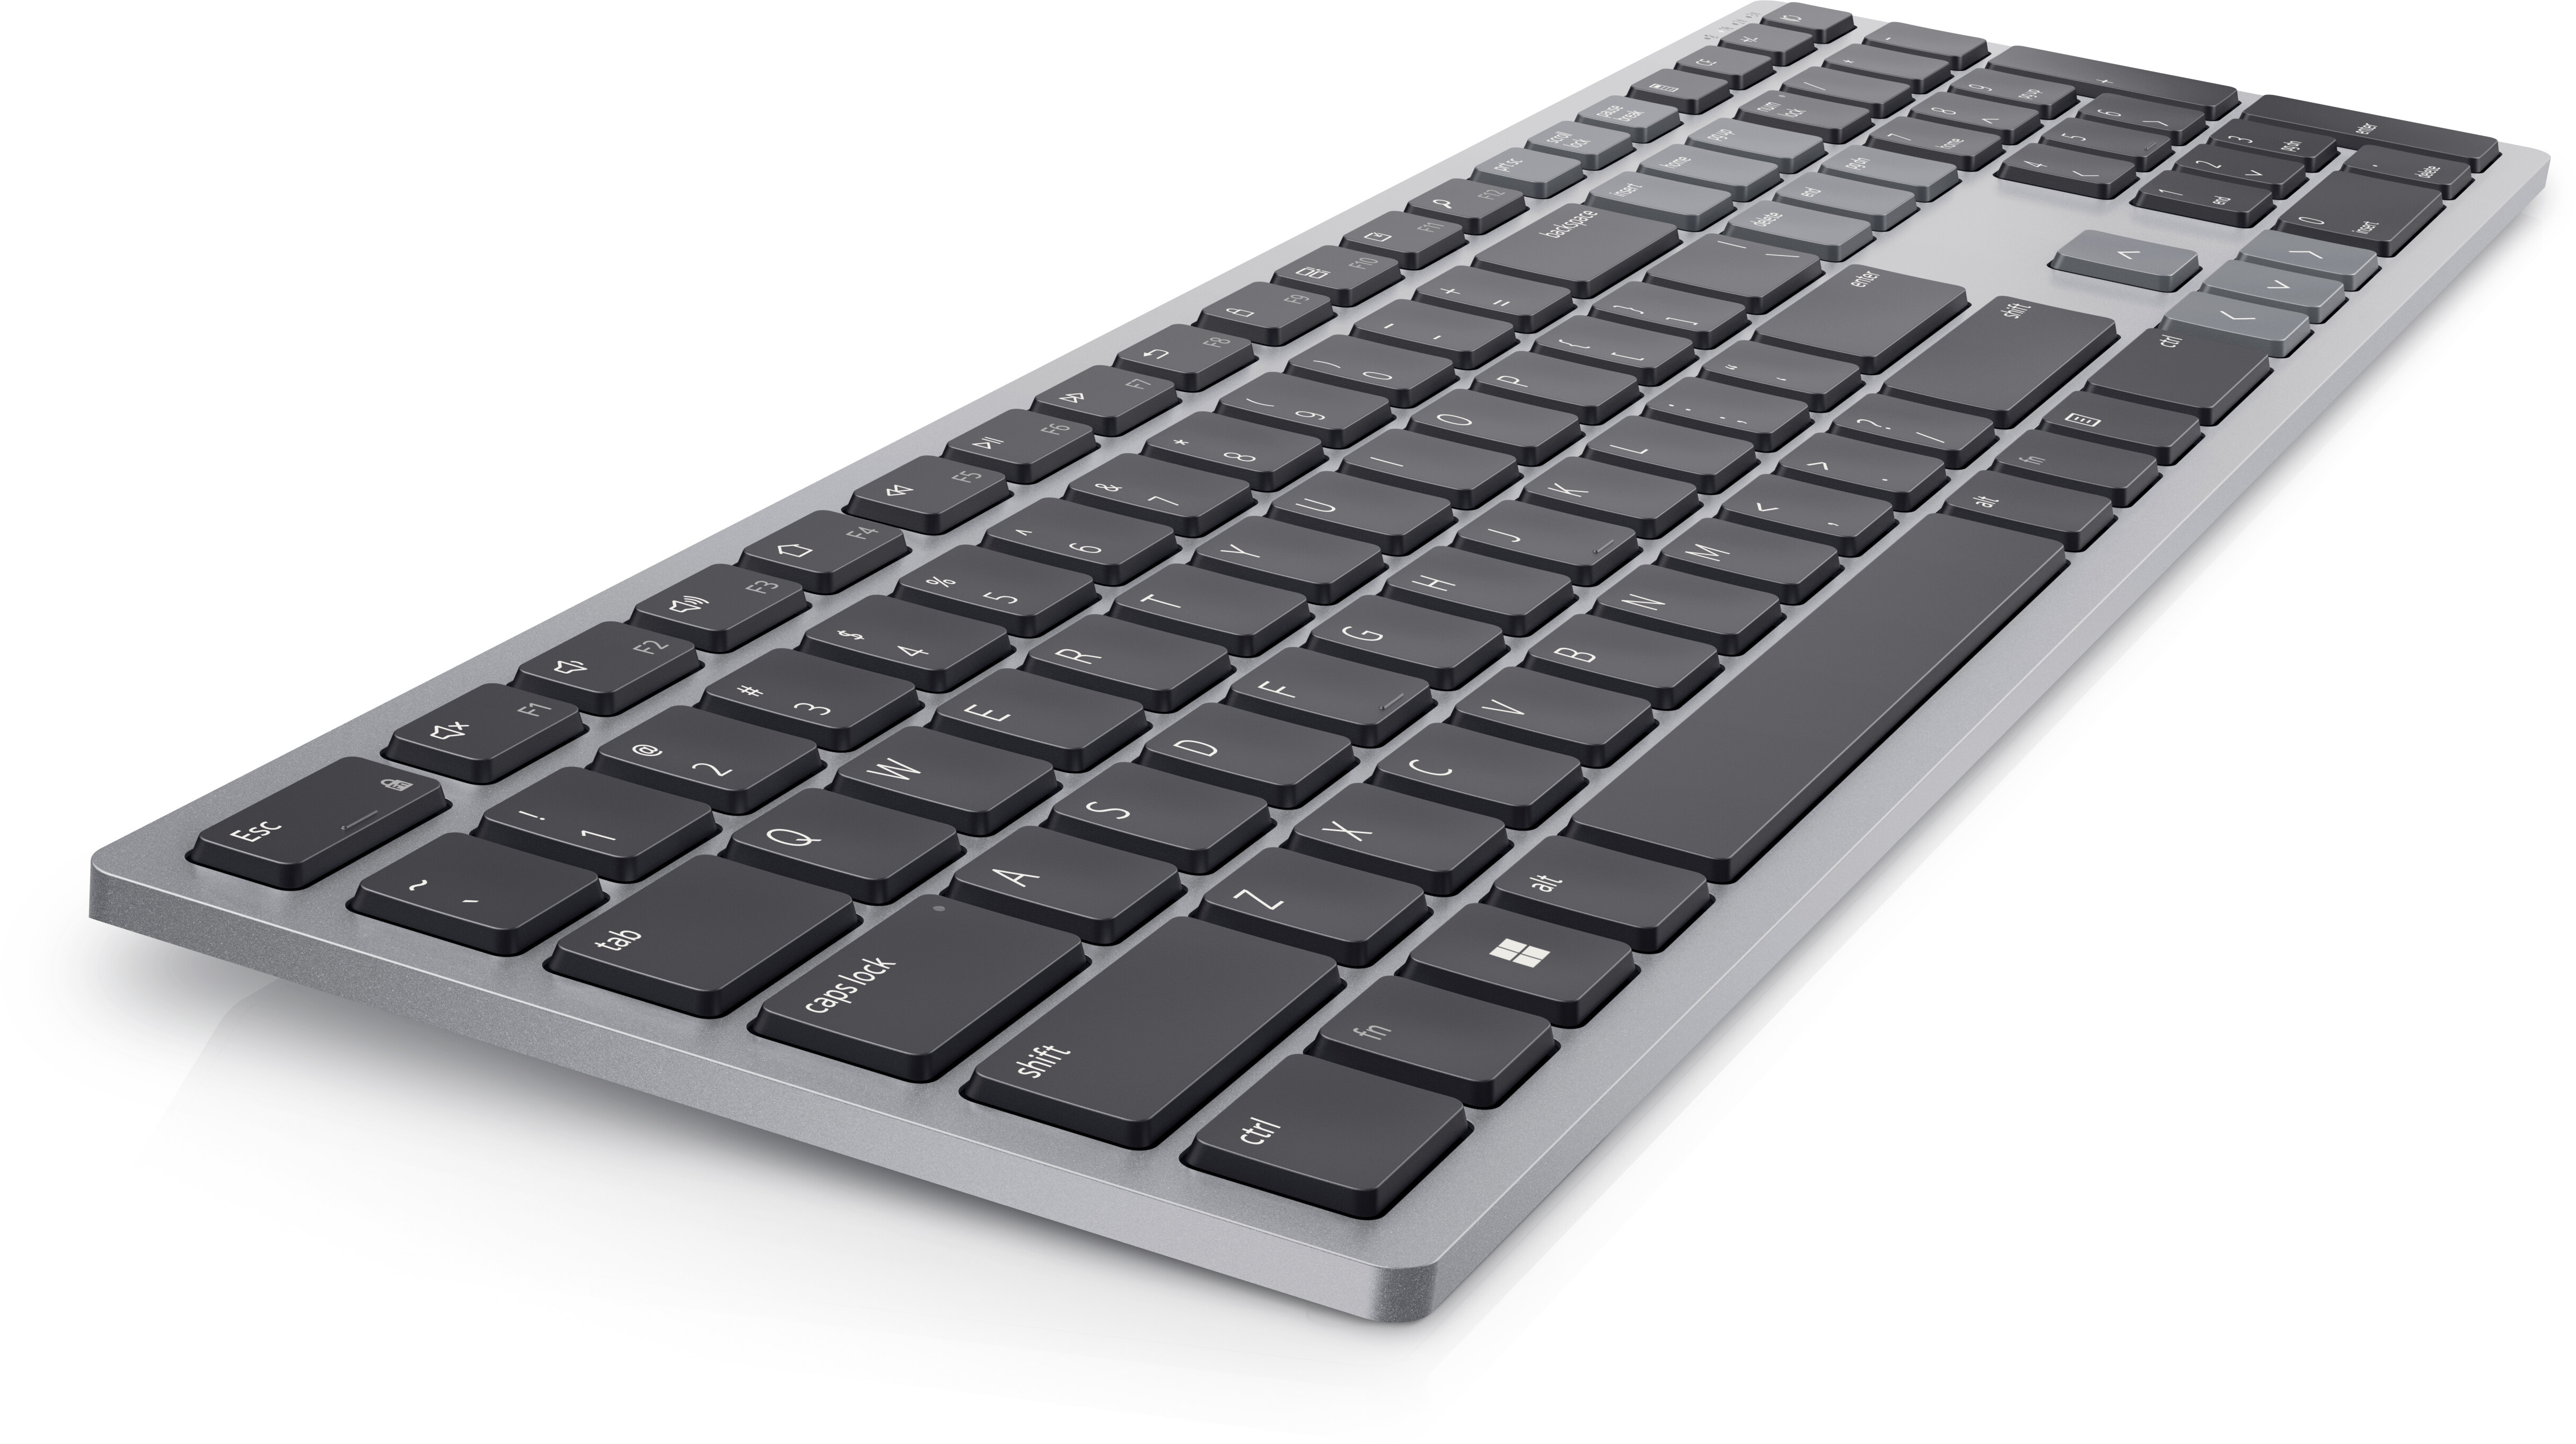 Multi-Device Wireless Keyboard – KB700 Dell USA